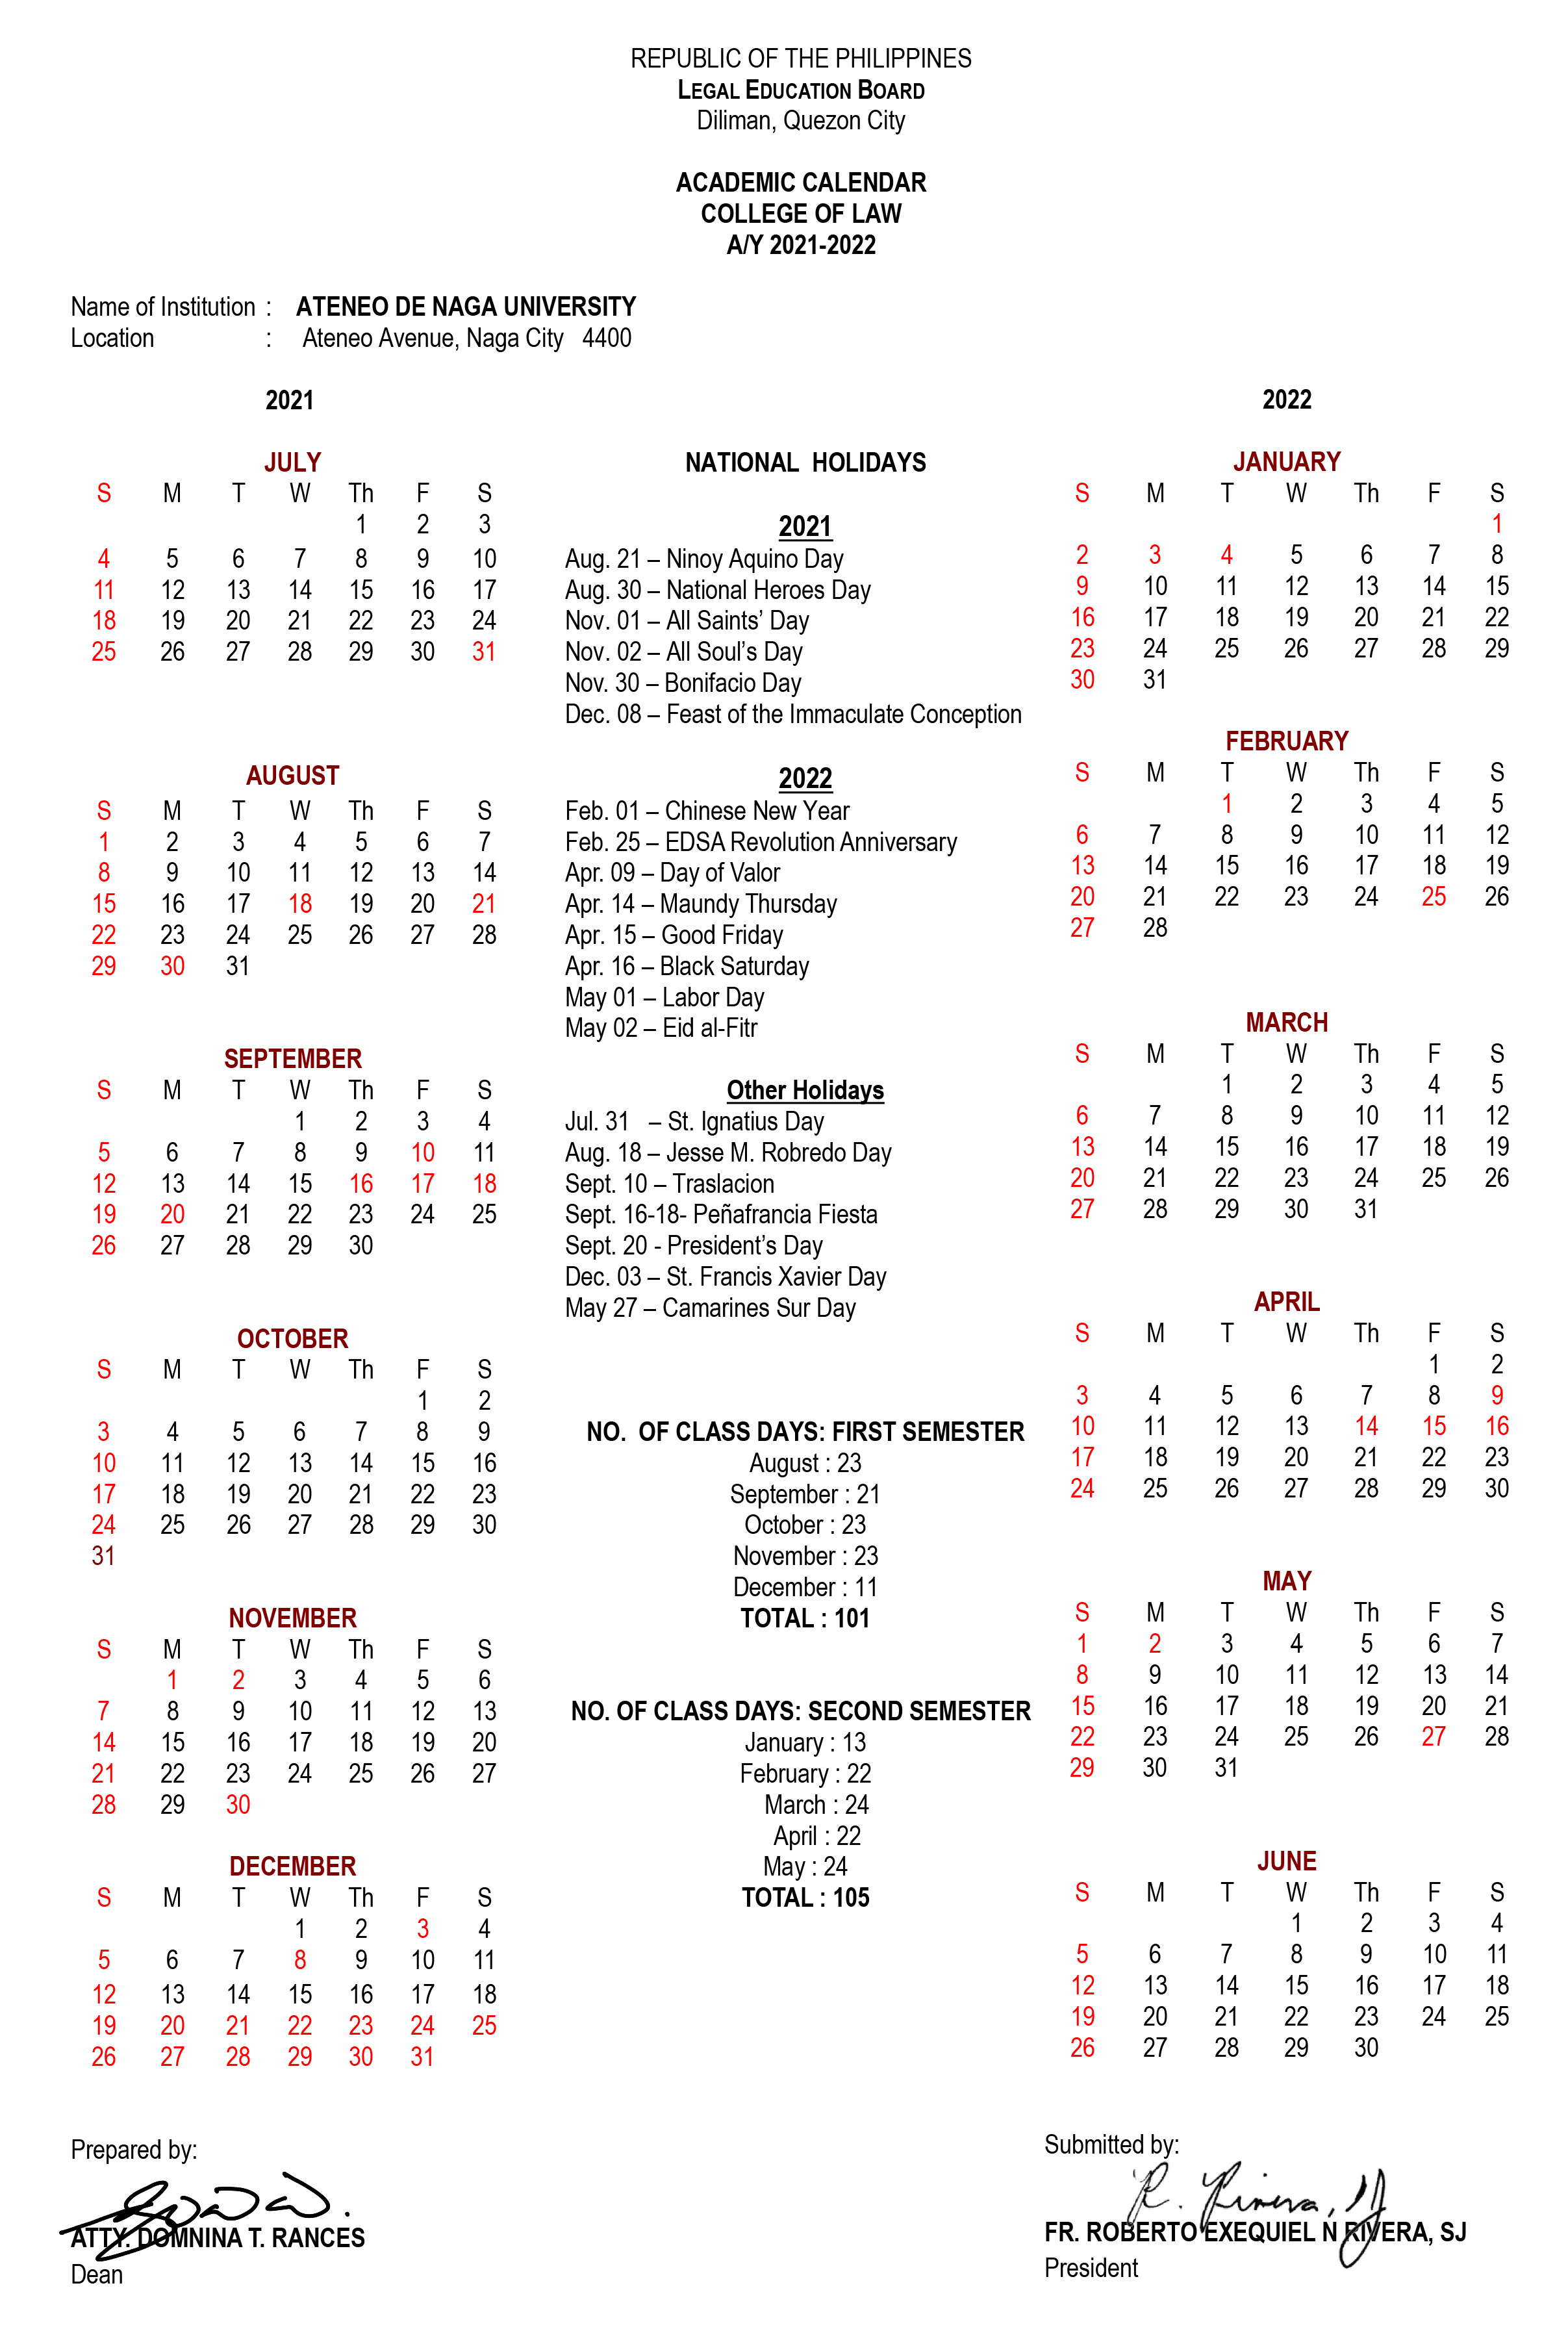 COL Academic Calendar AY2021-2022-1